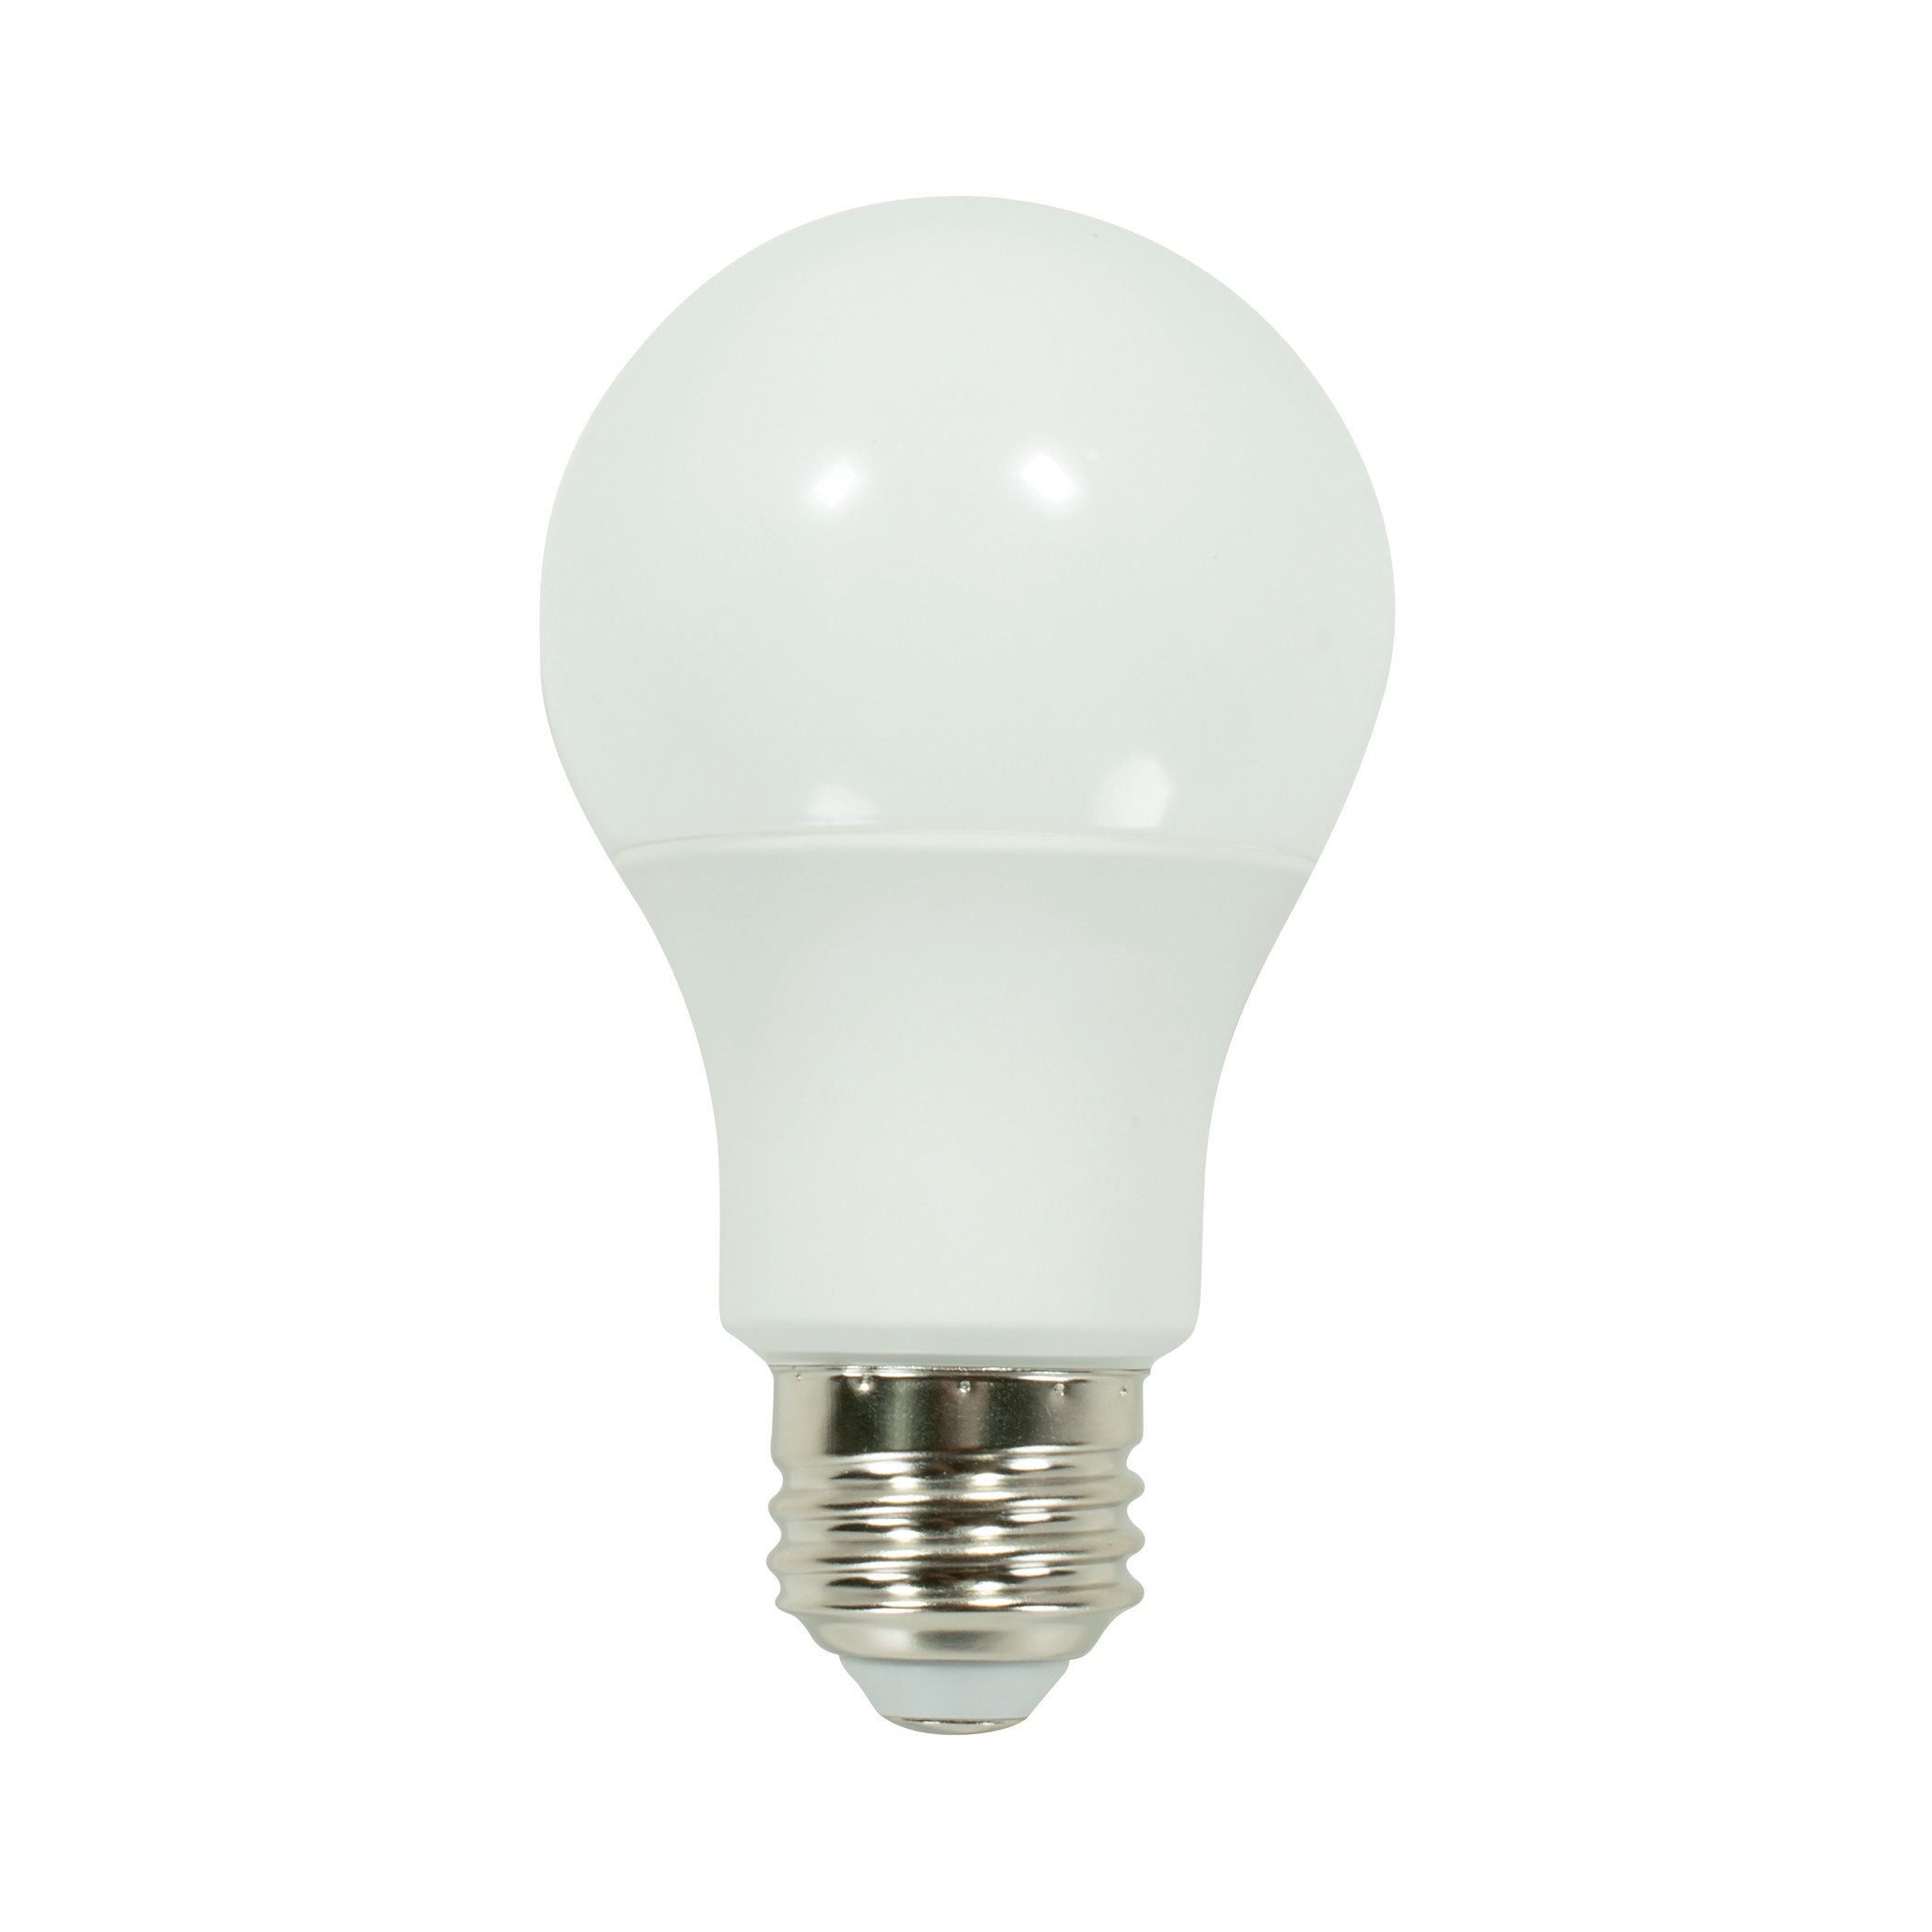 1500 Lumen LED A19 Bulb, 15-Watt, 100-Watt Equivalent E26 - 90 Pack Master Case